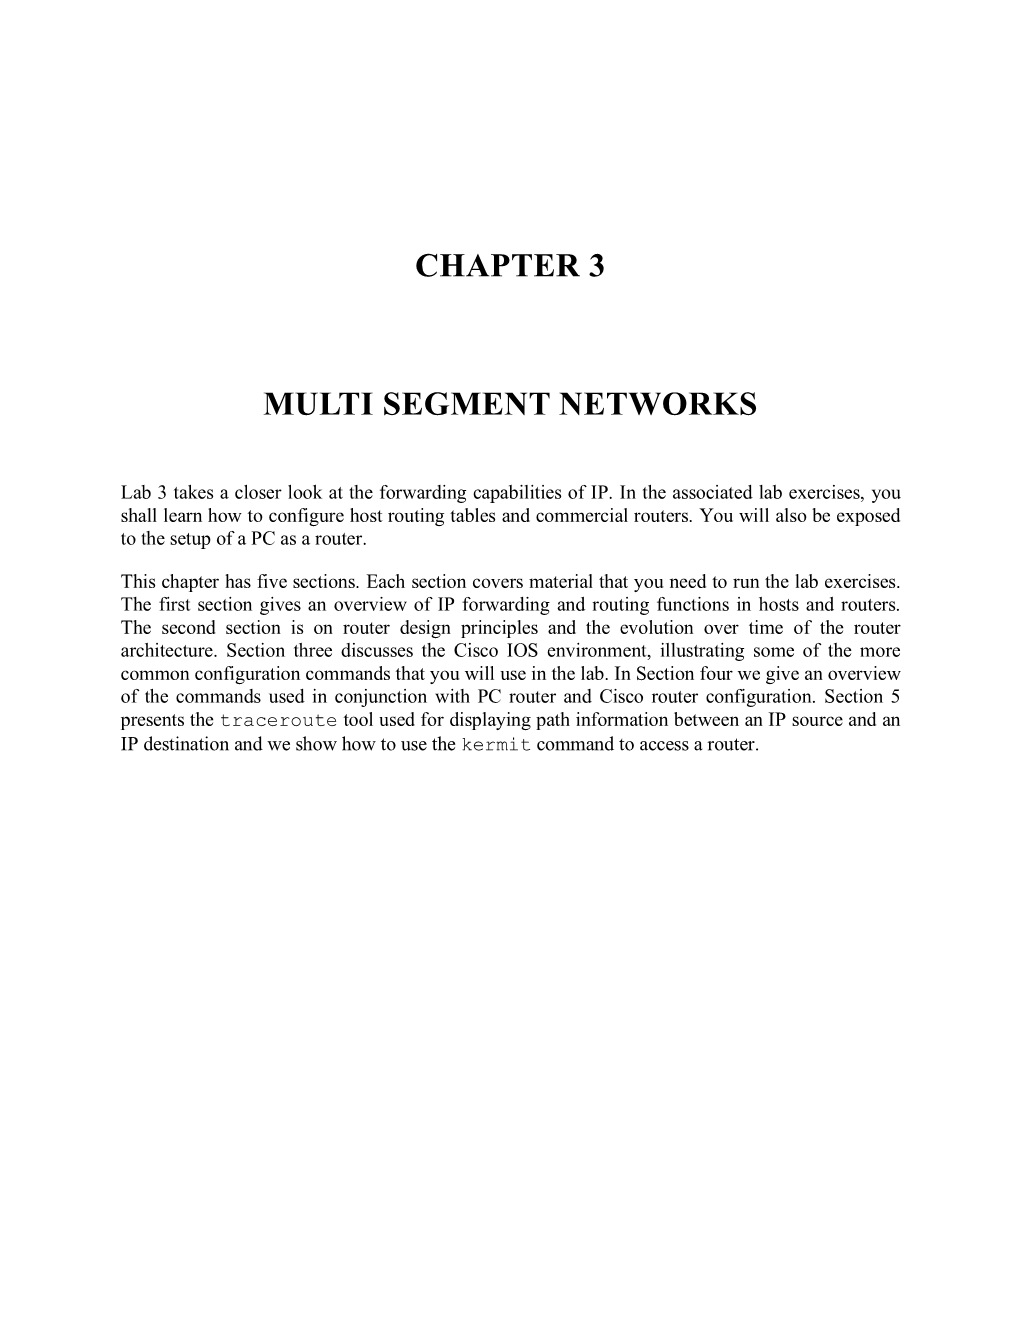 Chapter 3 Multi Segment Networks